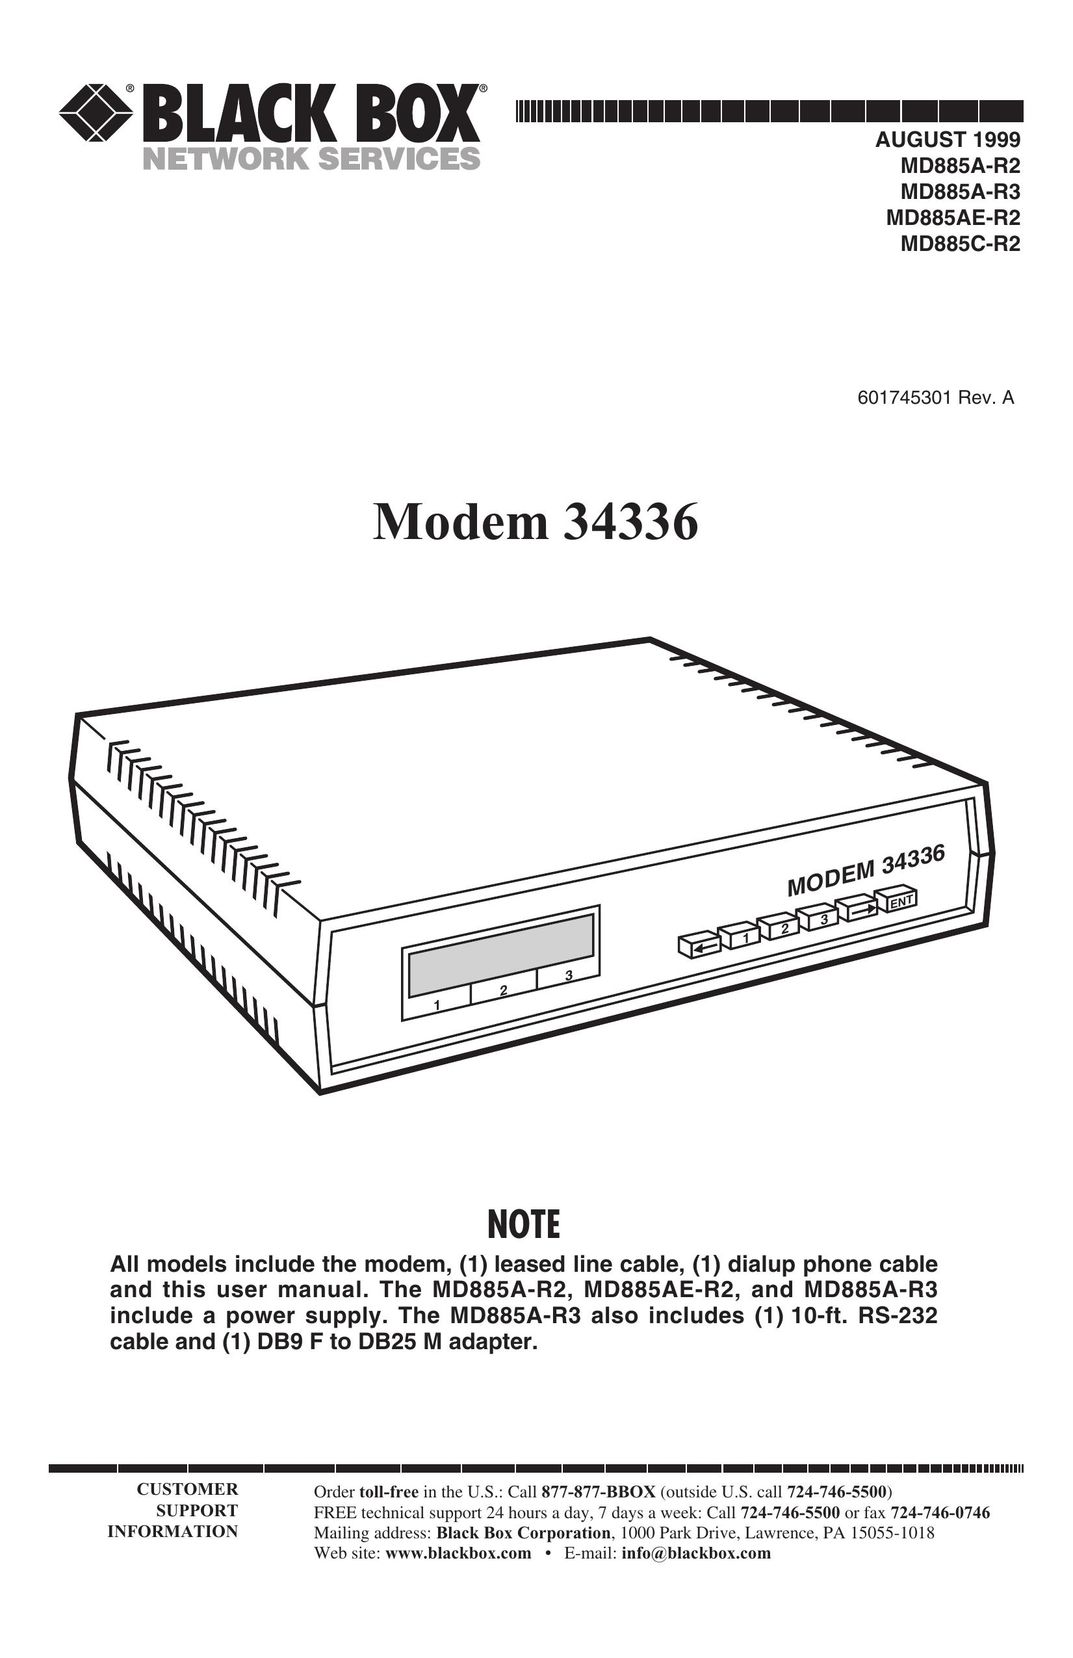 Black Box MD885AE-R2 Modem User Manual